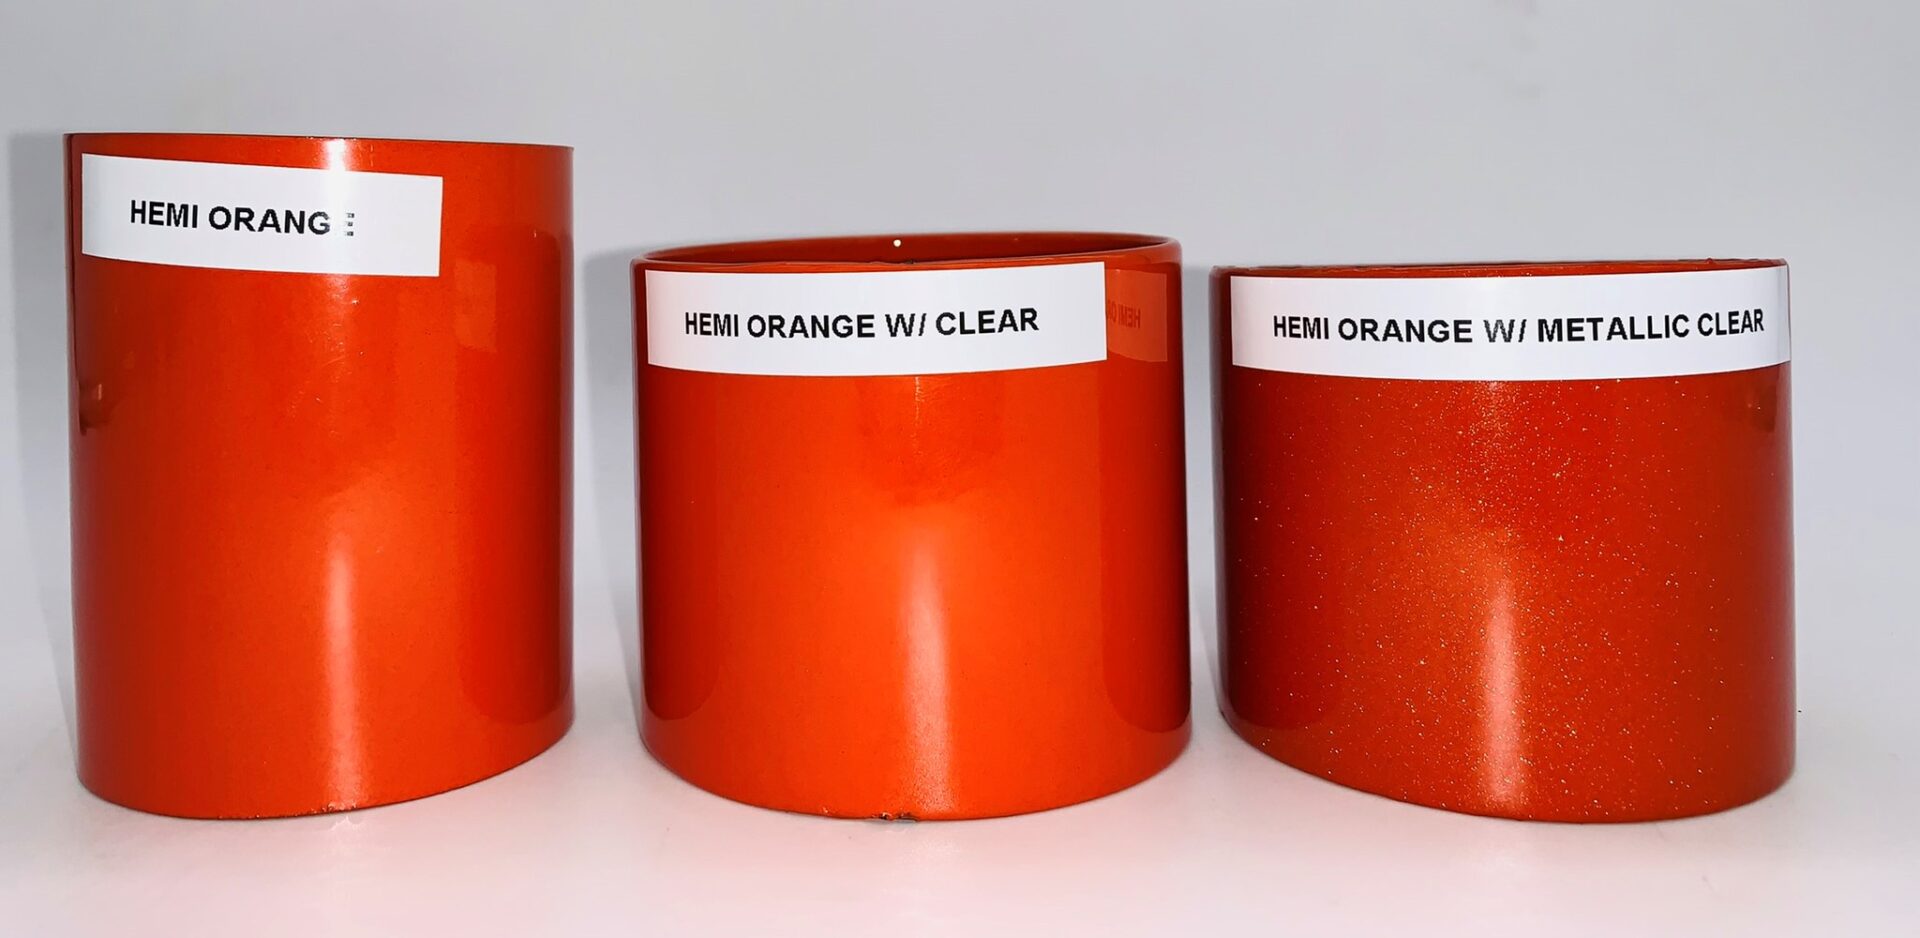 Hemi orange color with a metallic clear part